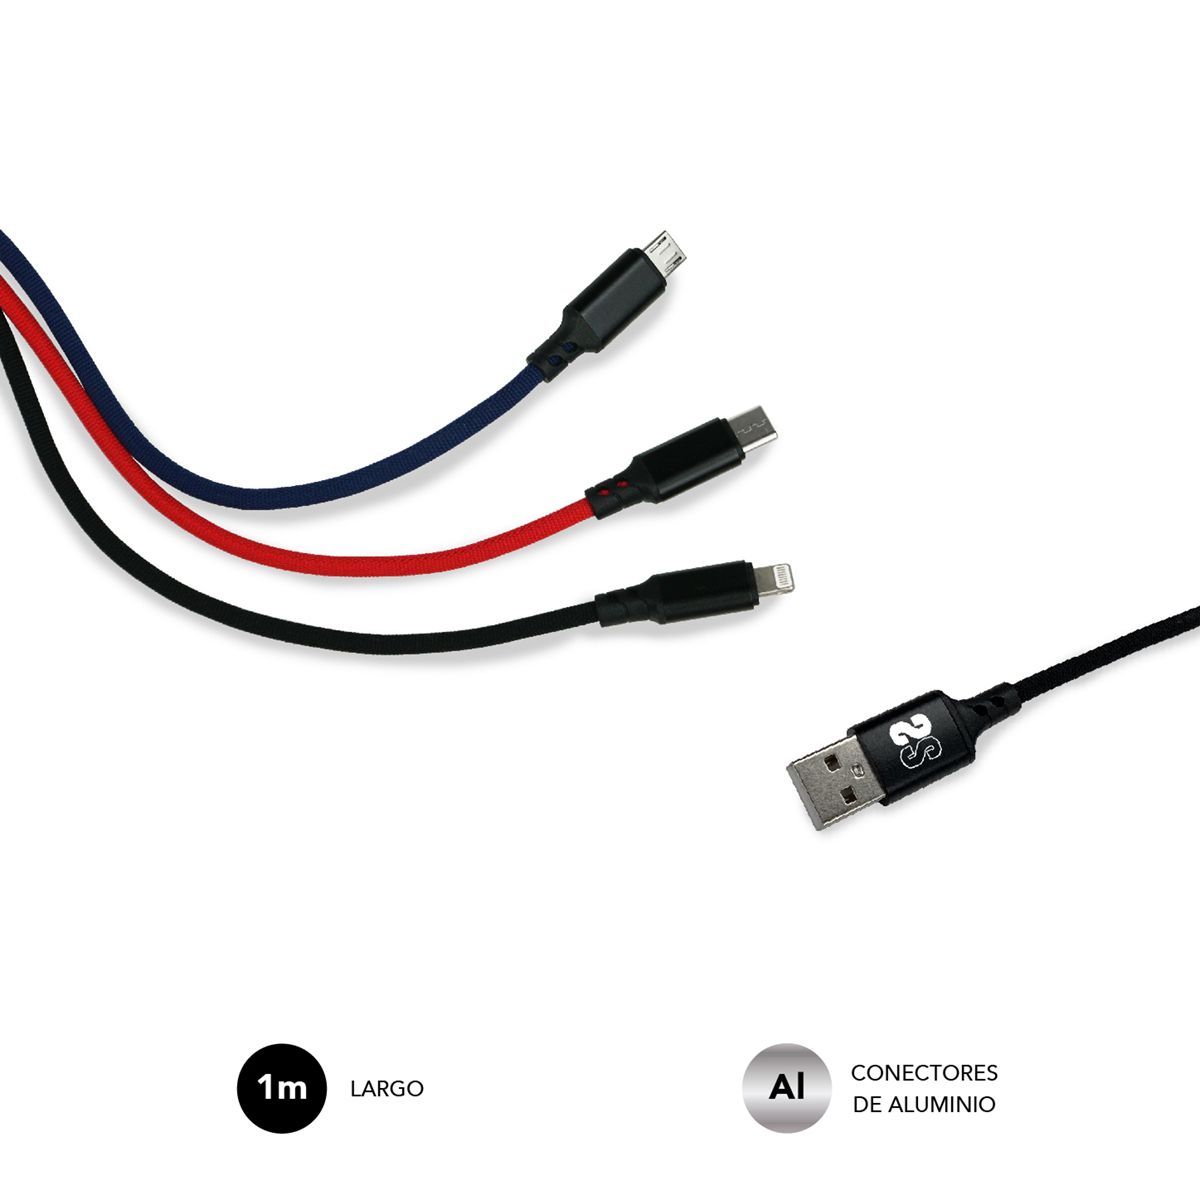 Premium Cable 3en1 (2.4A) Micro USB+Type C+Lighting